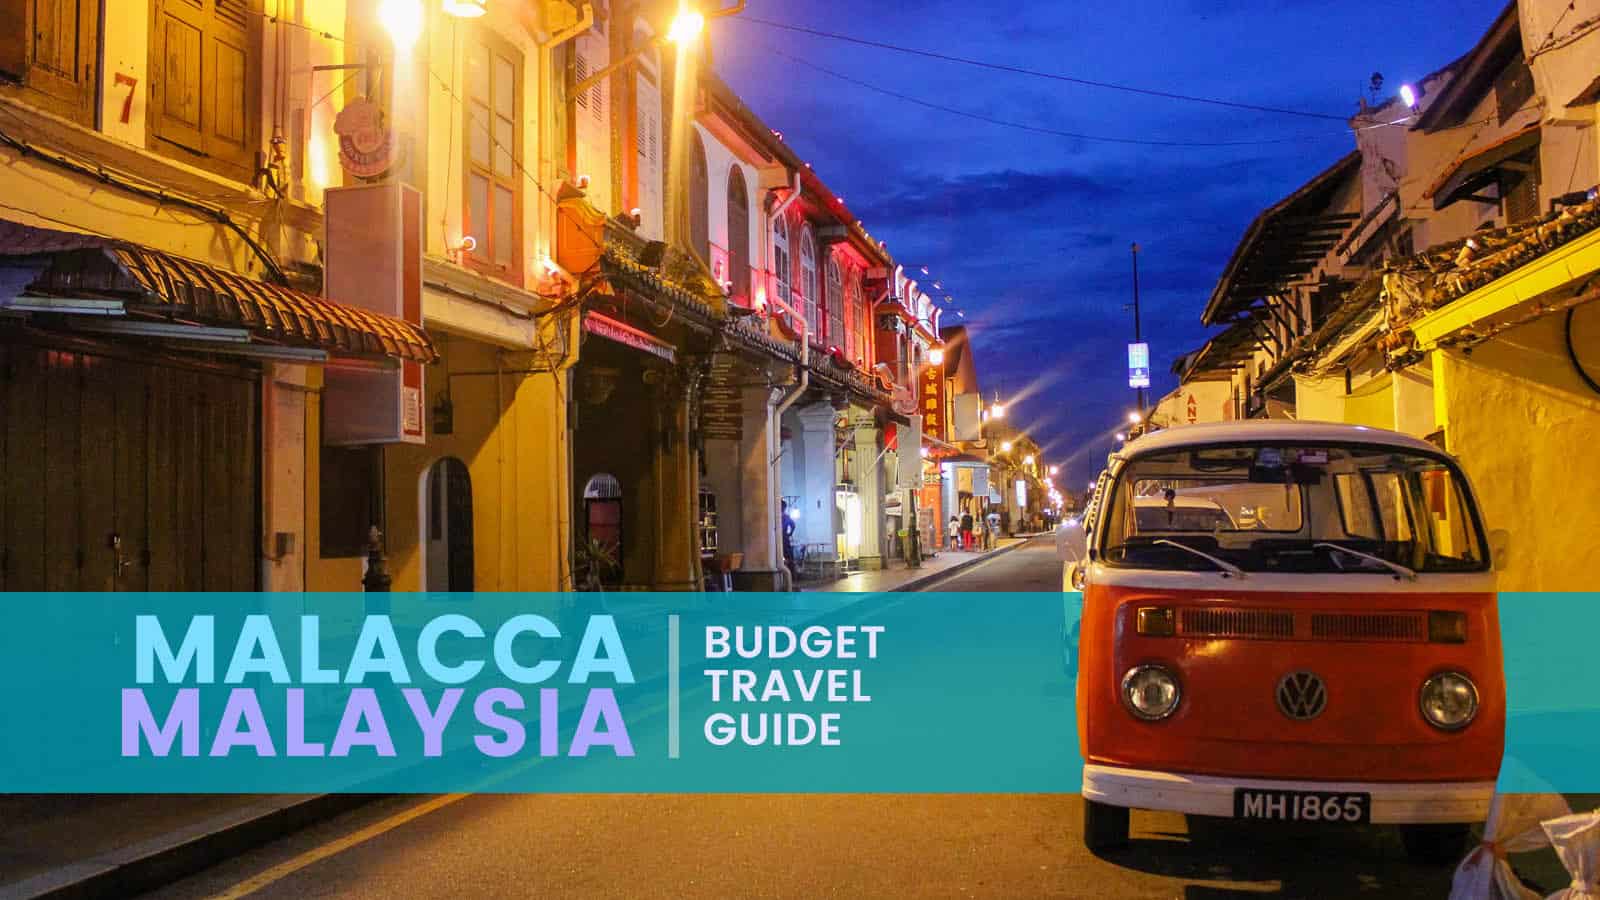 MALACCA, MALAYSIA: Budget Travel Guide